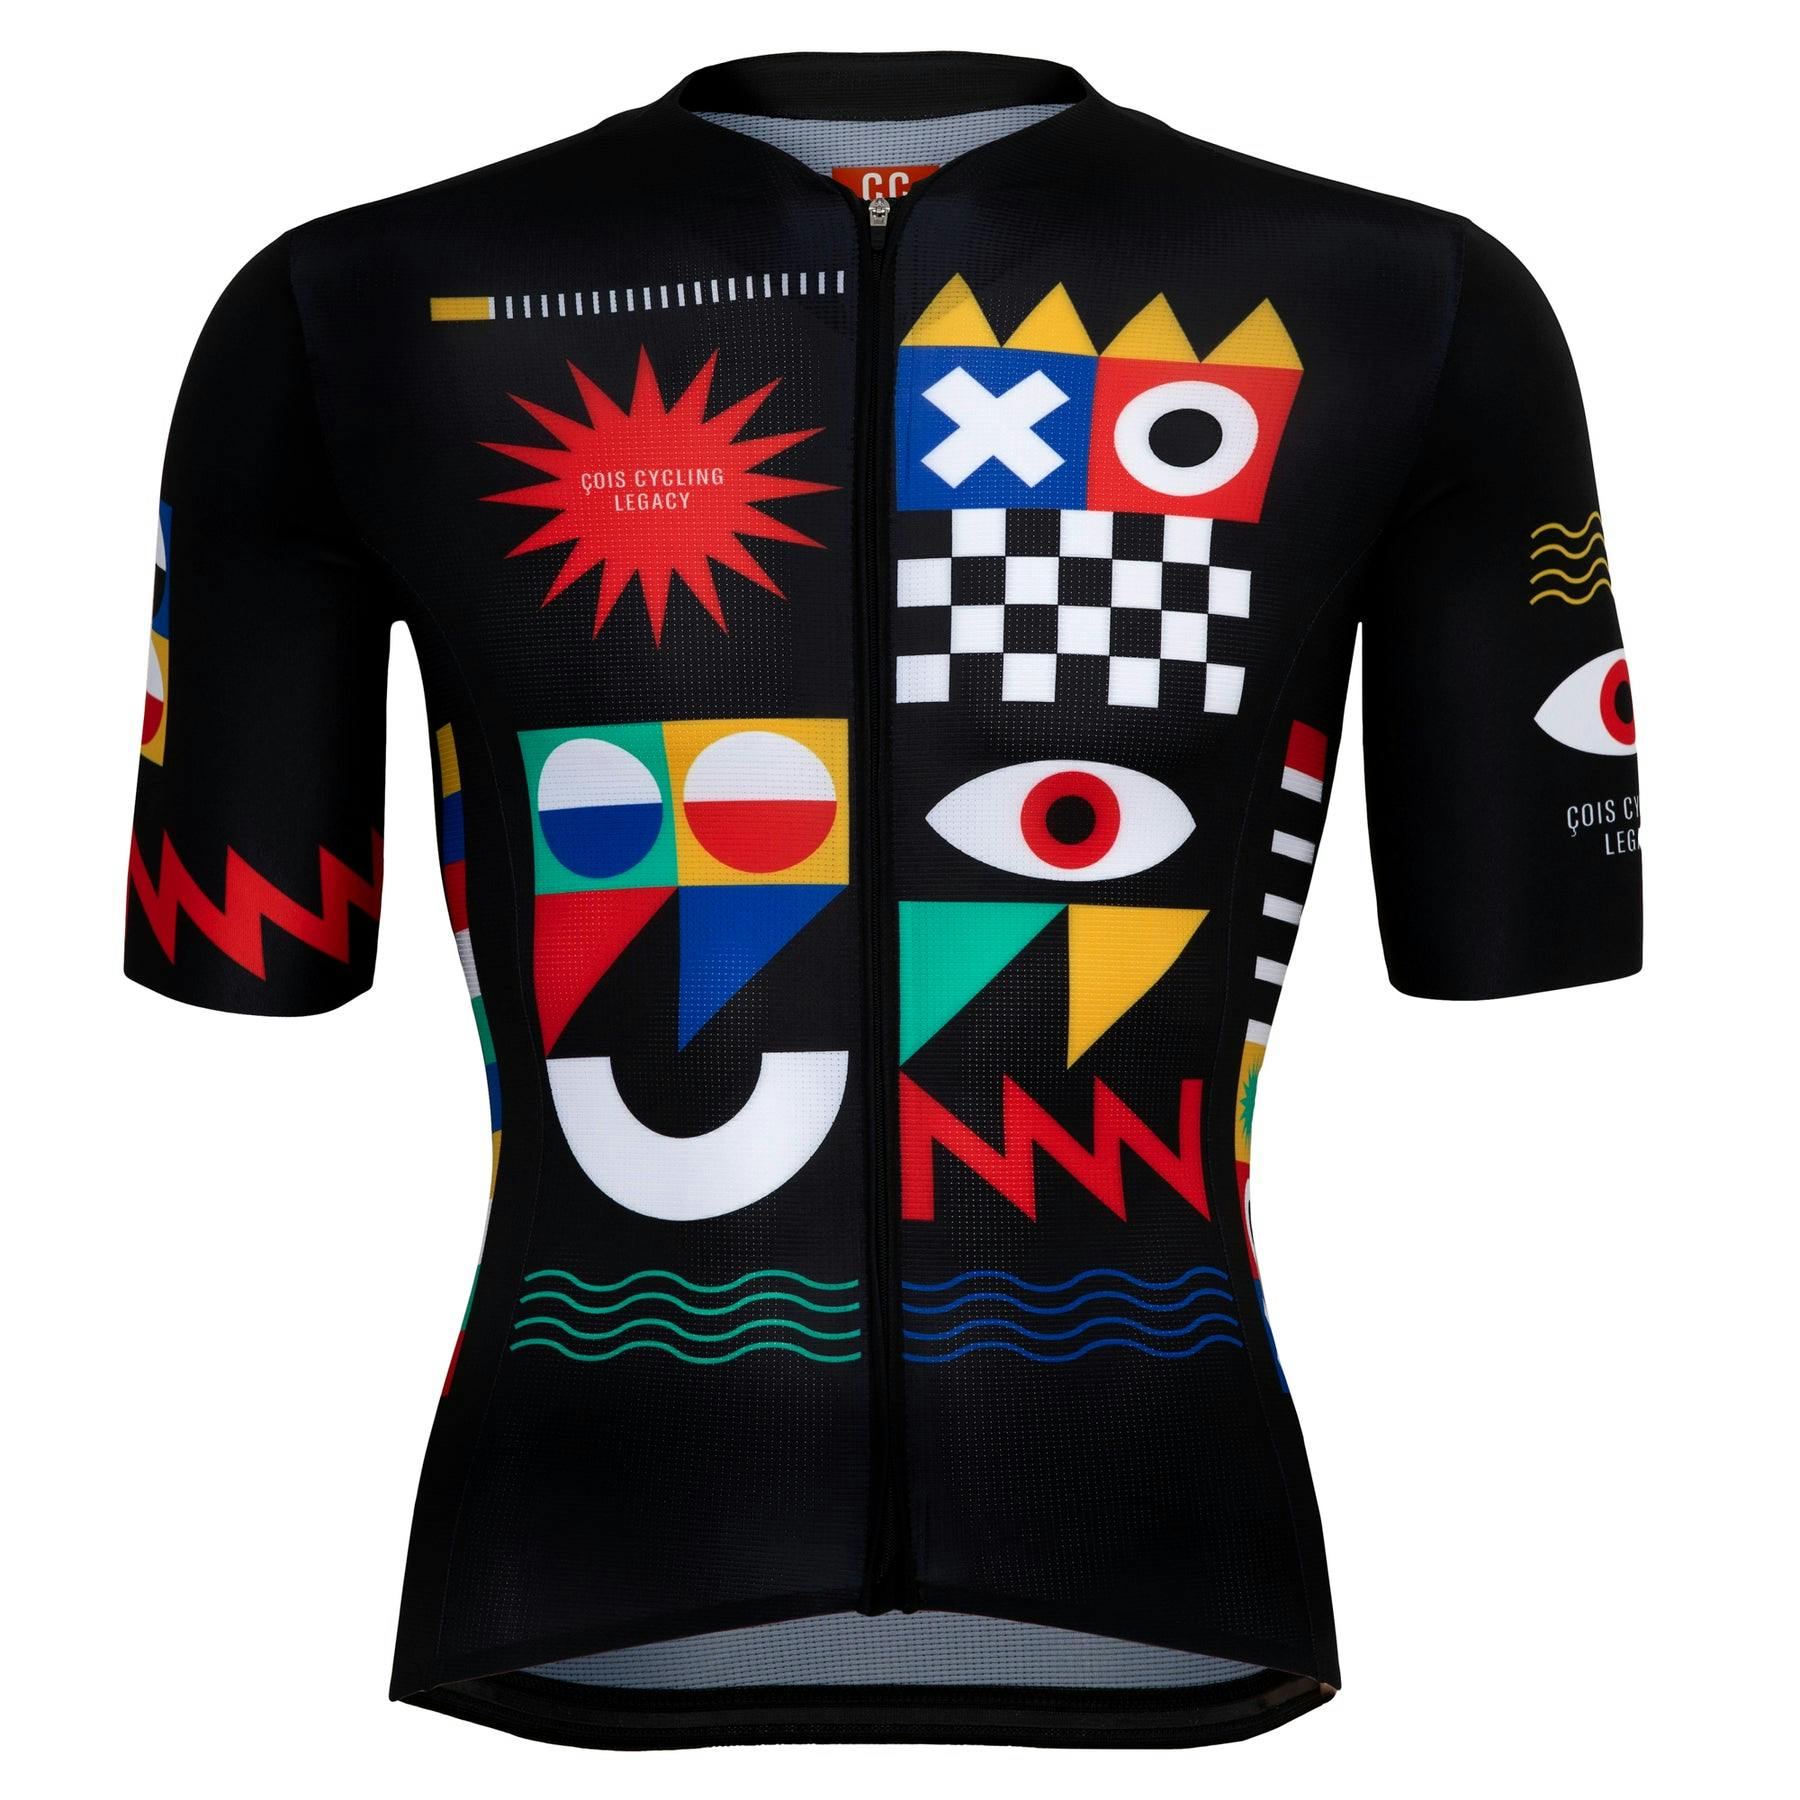 Posterlad cycling jersey black (women)